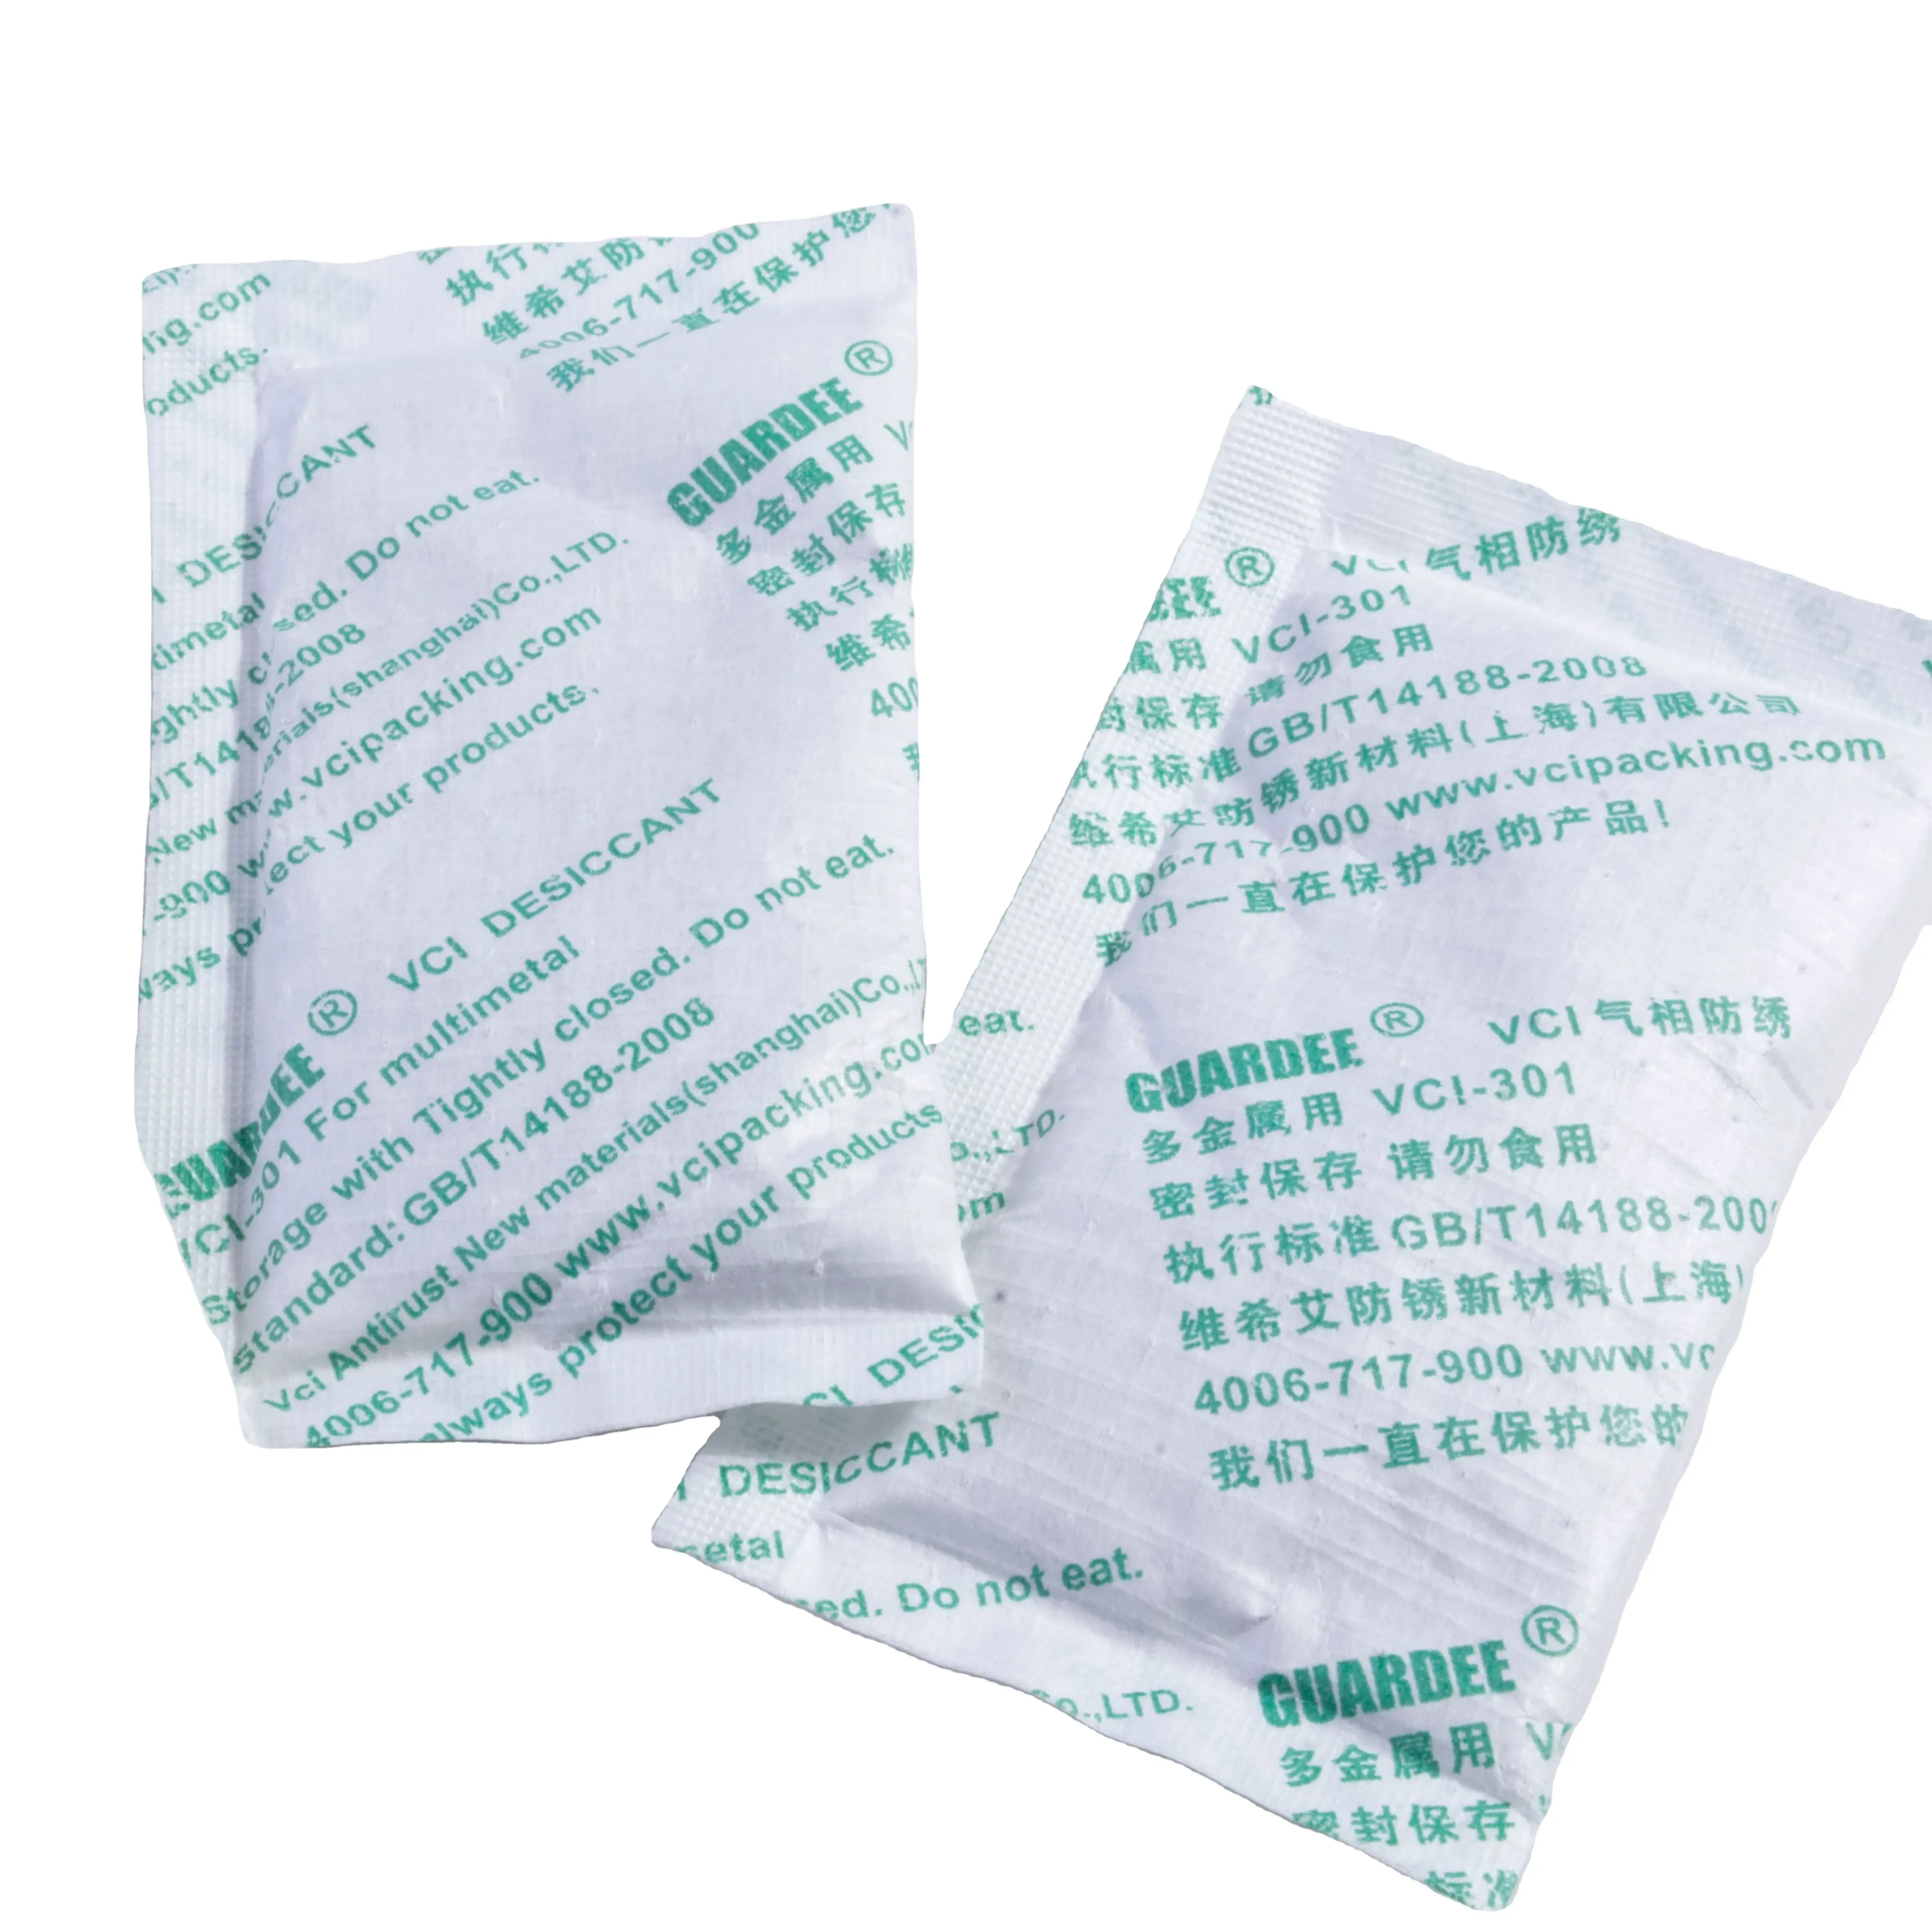 金属防錆化学物質予防補助超乾燥で強力な防錆性能乾燥剤バッグ